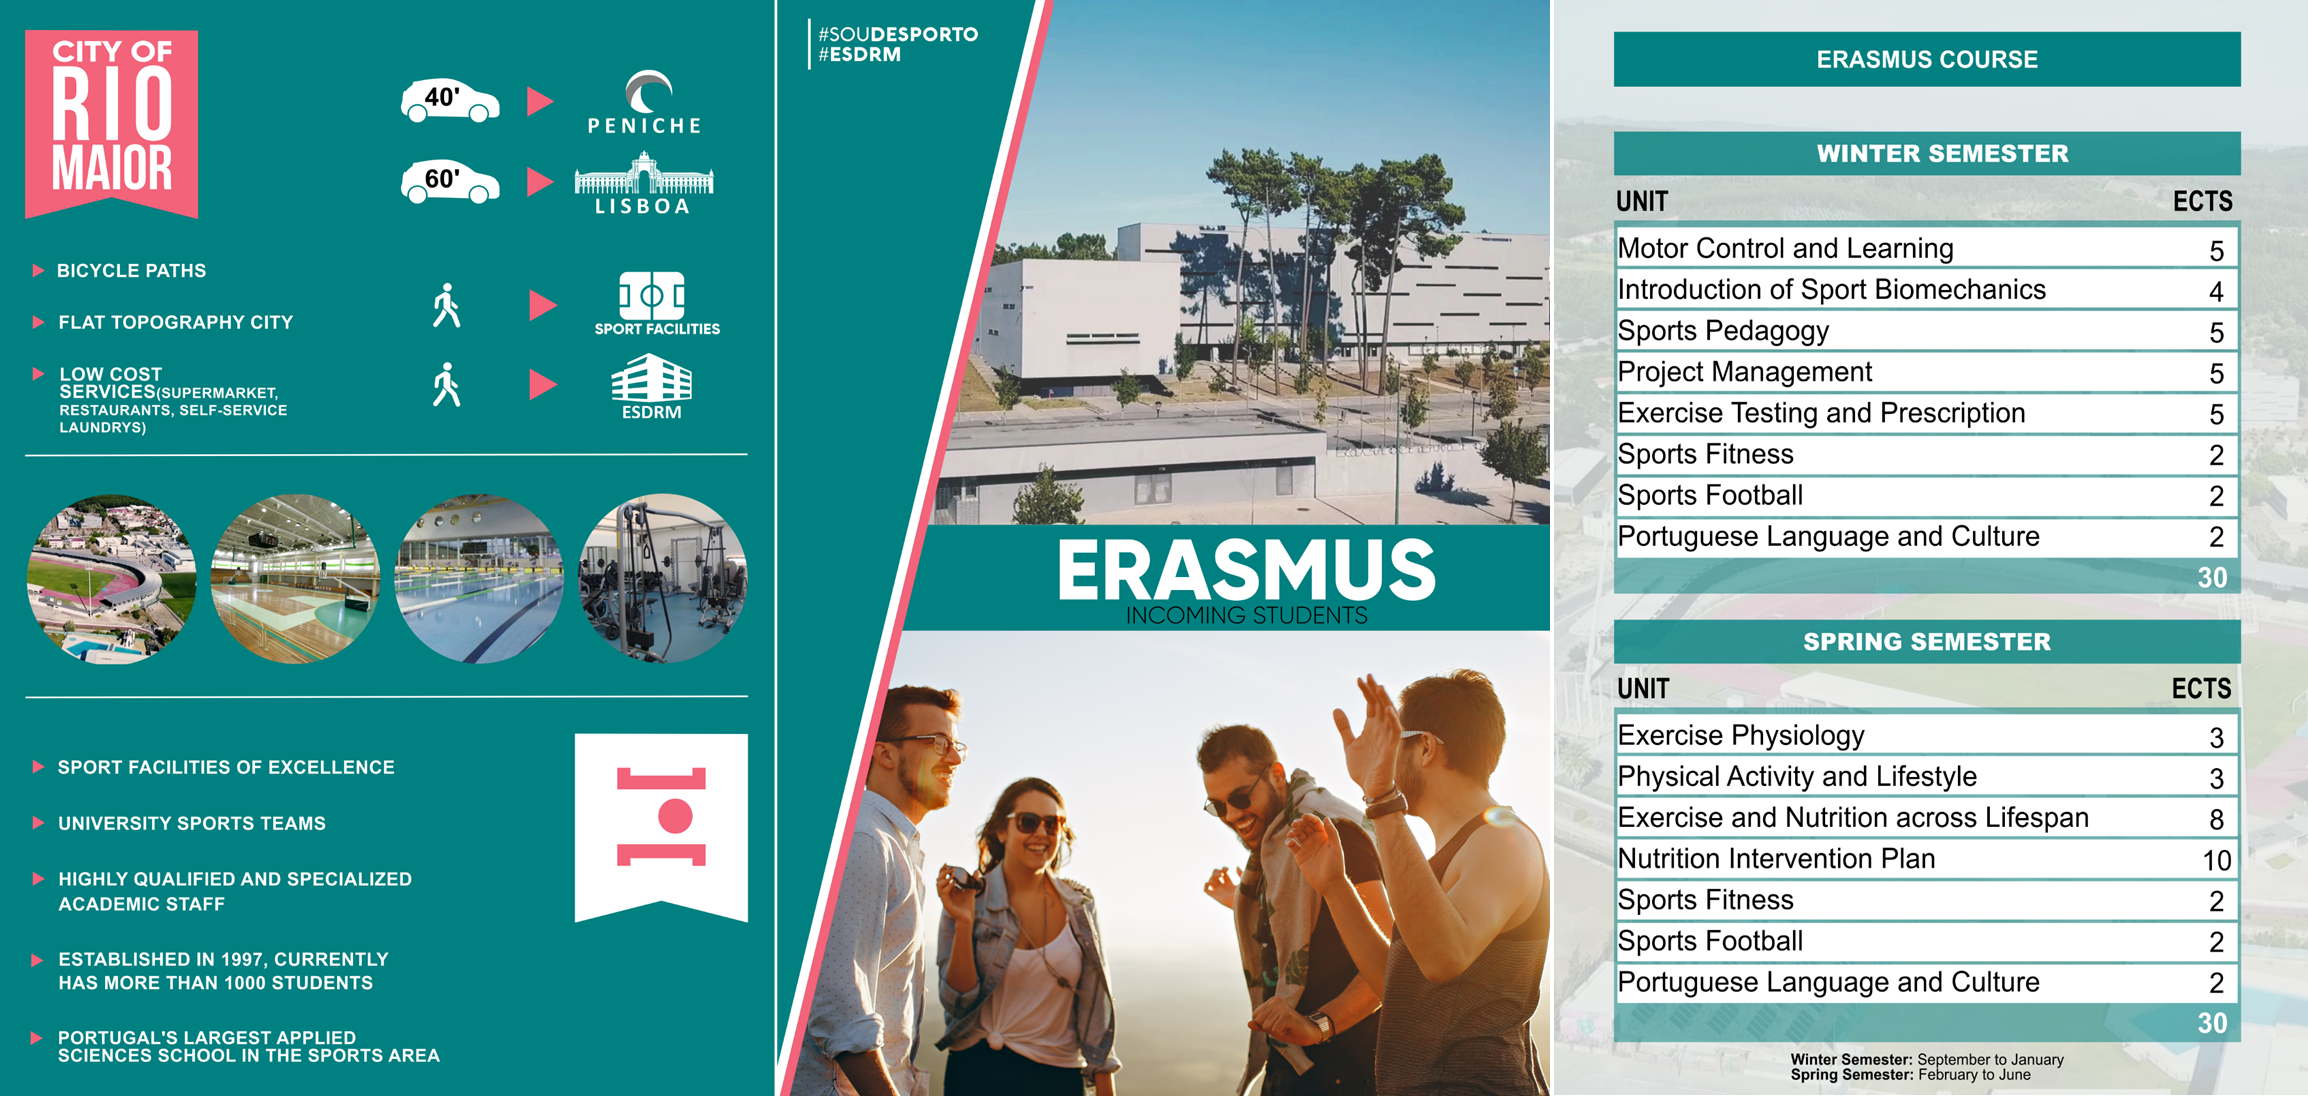 Erasmus Course